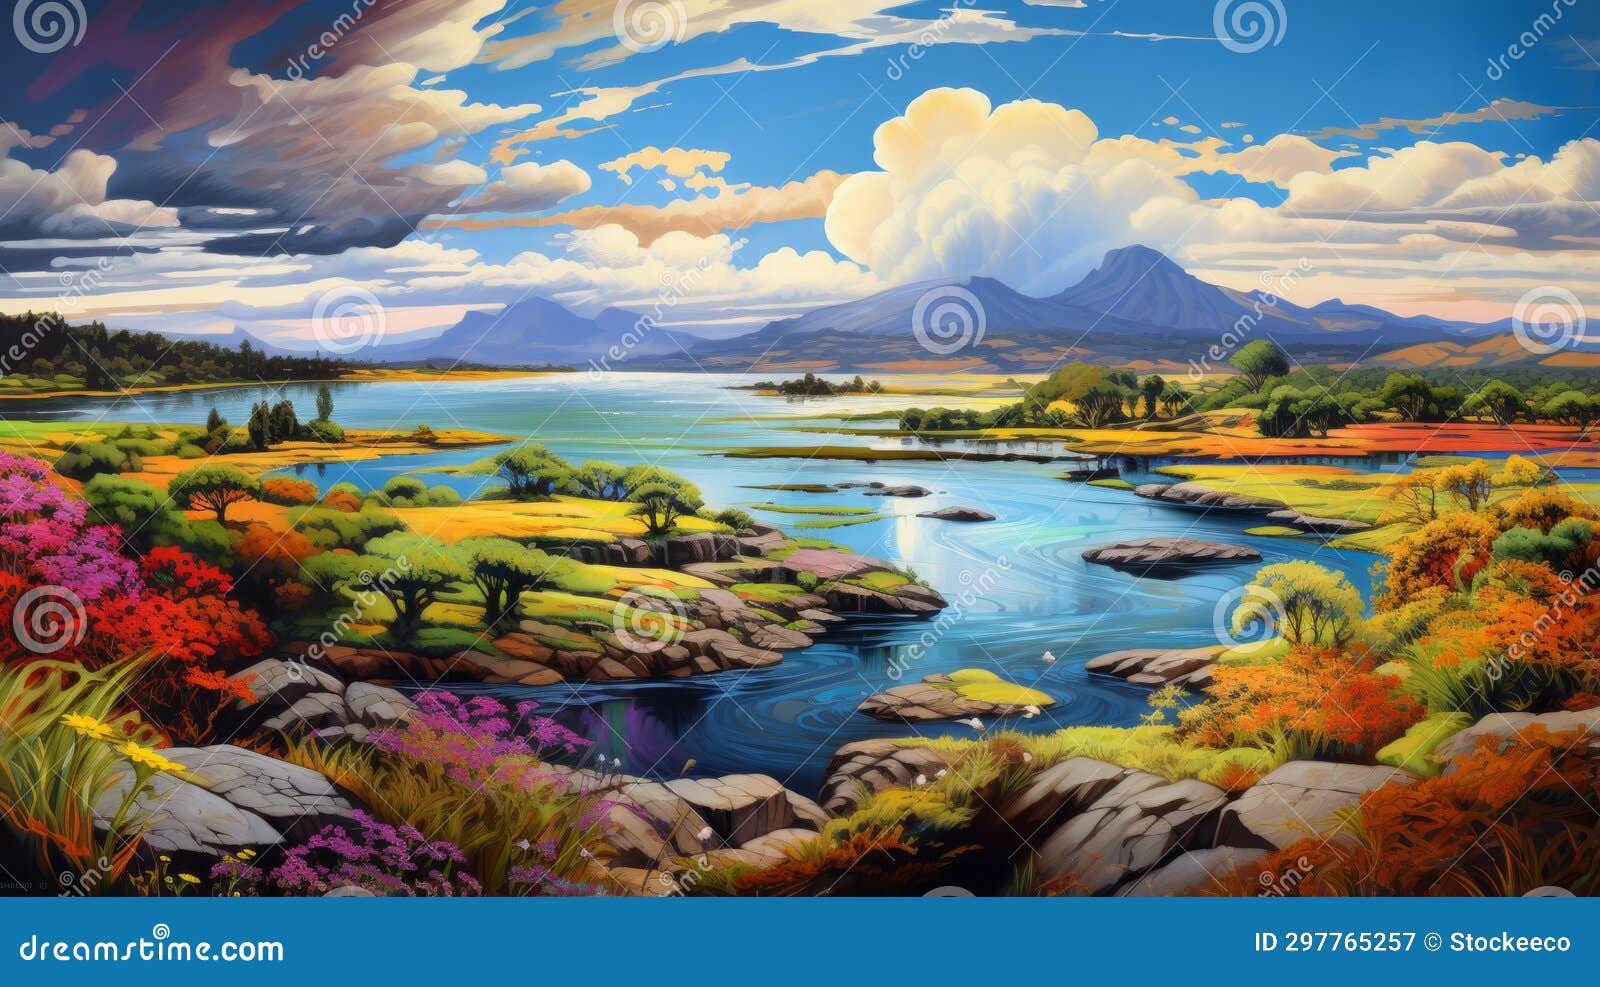 vibrant scottish landscape painting with river - inspired by tim hildebrandt